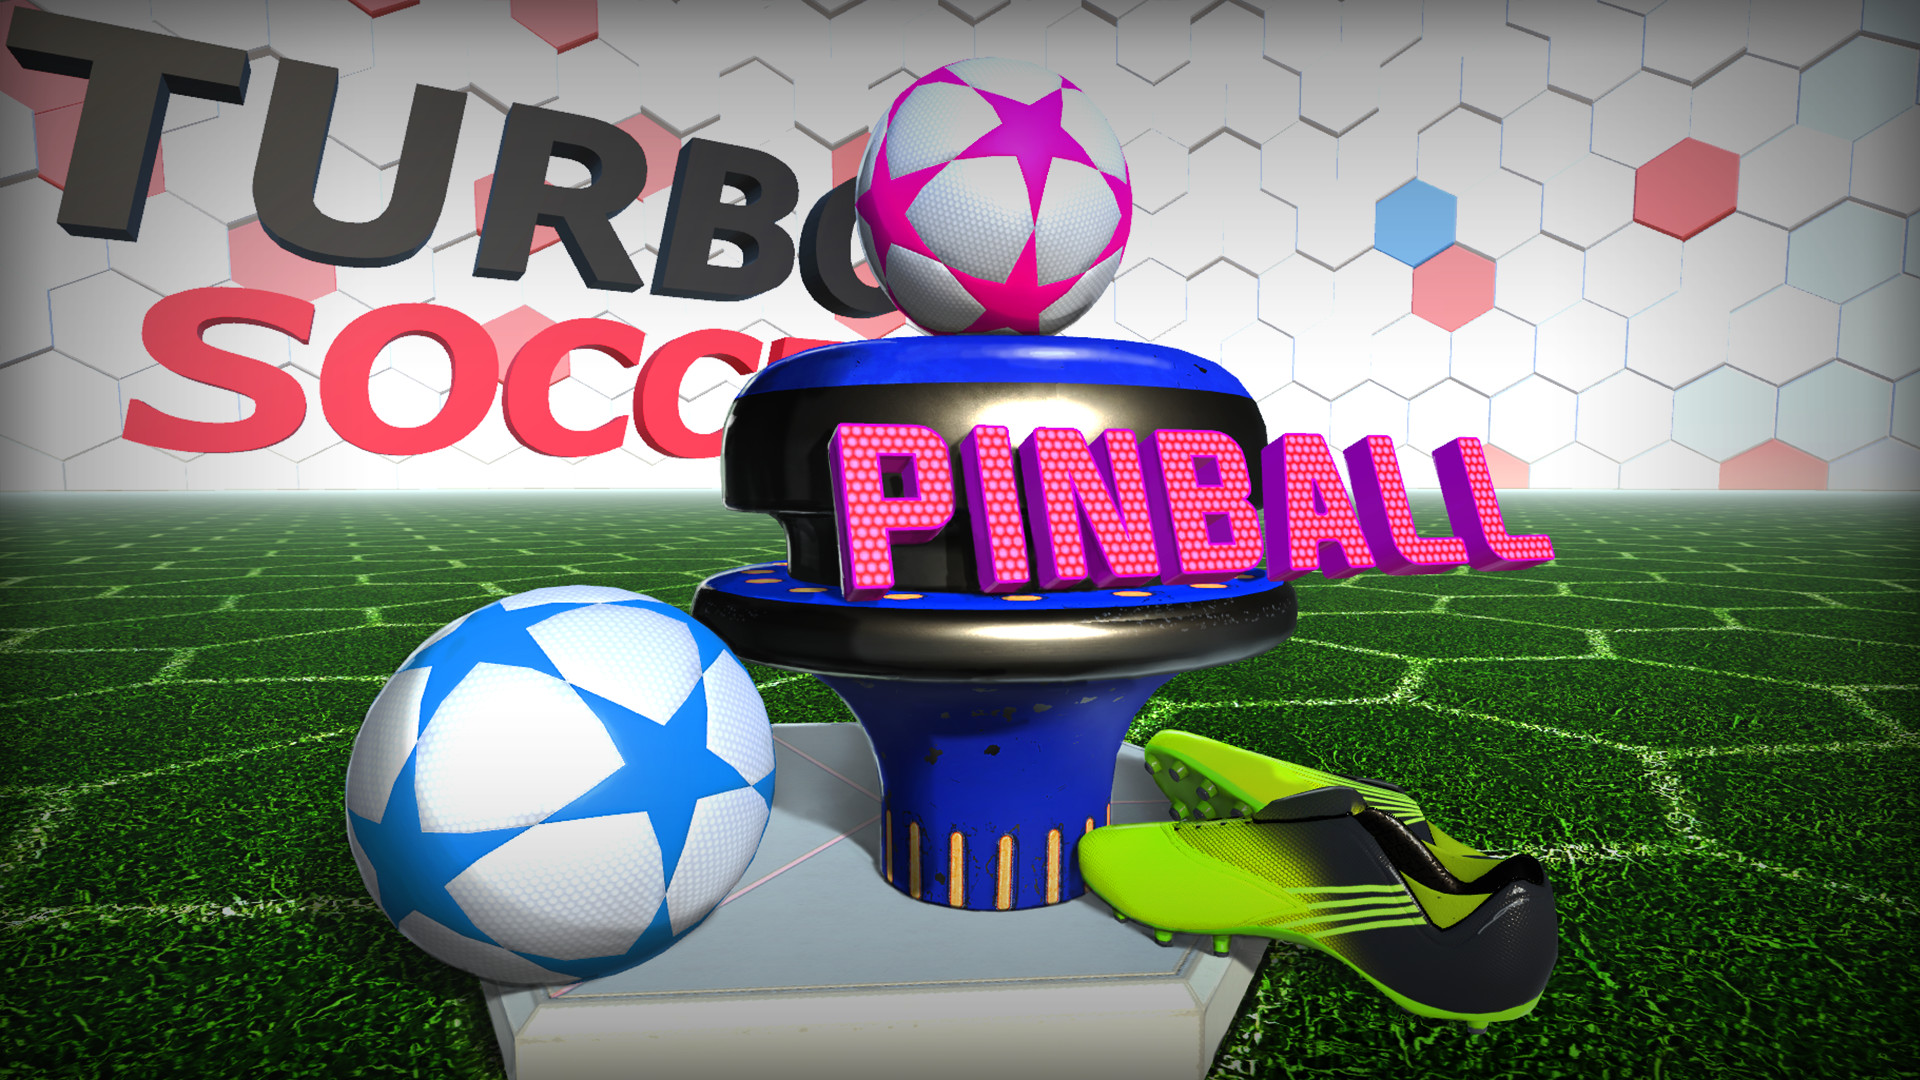 Turbo Soccer VR screenshot